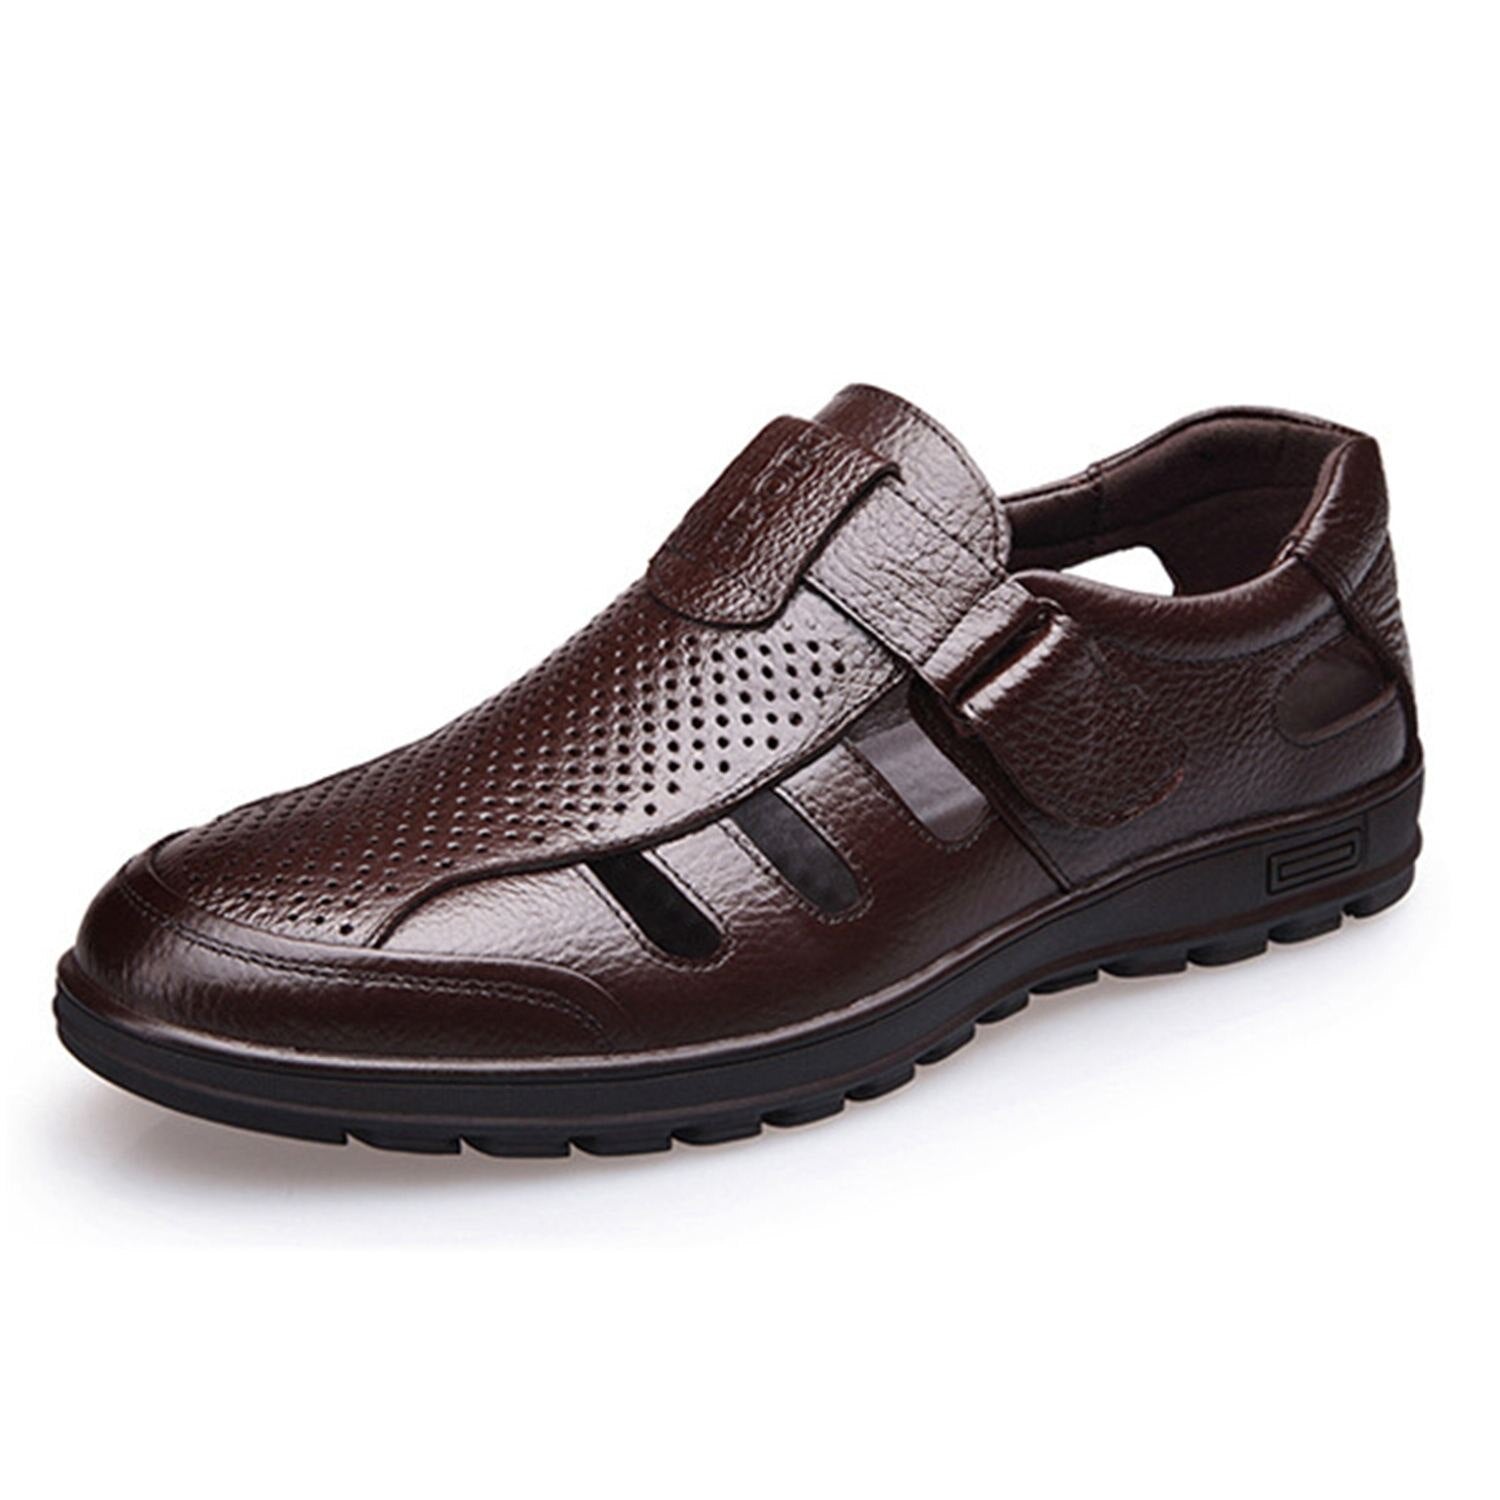 Genuine Leather Men Sandals Shoes Fretwork Breathable Fisherman Shoes Style Retro Gladiator Soft Bottom summer Classics m - ebowsos